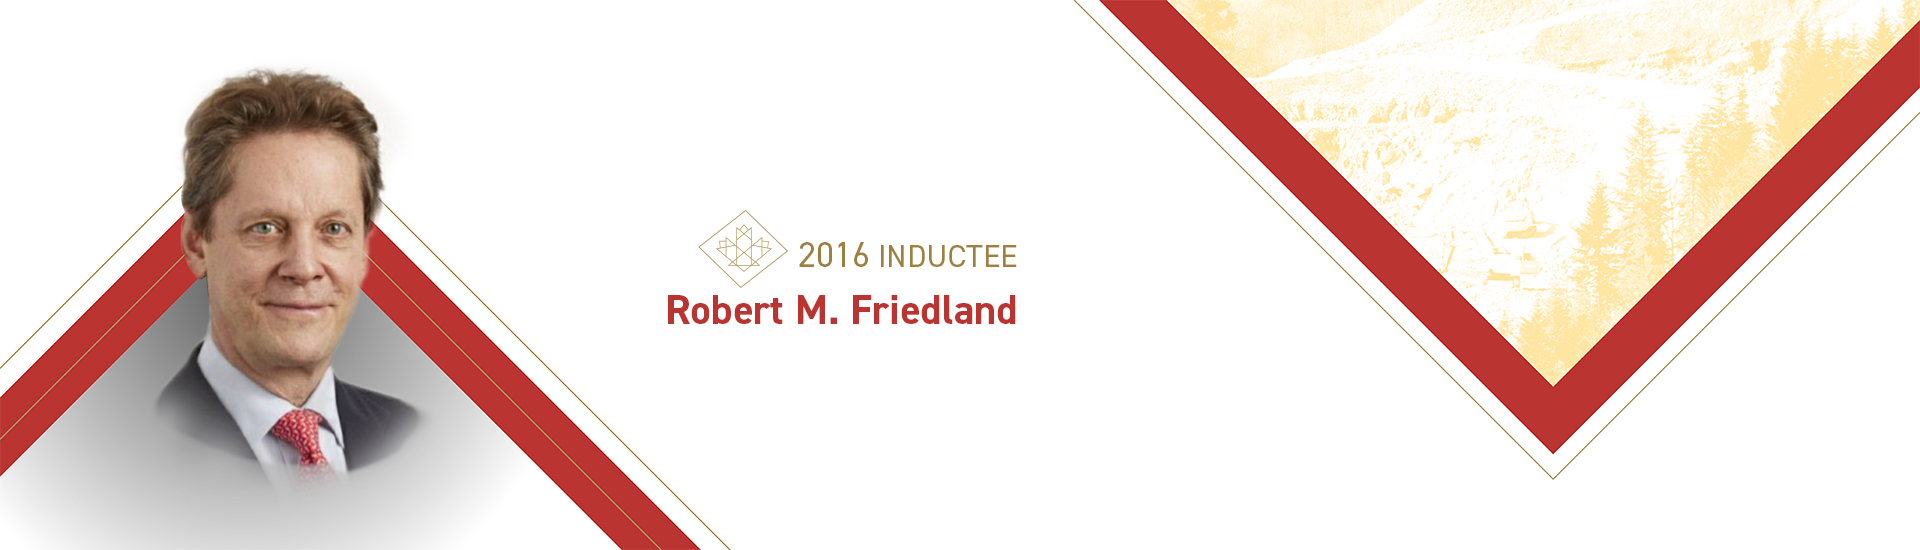 Robert M. Friedland (b. 1950)